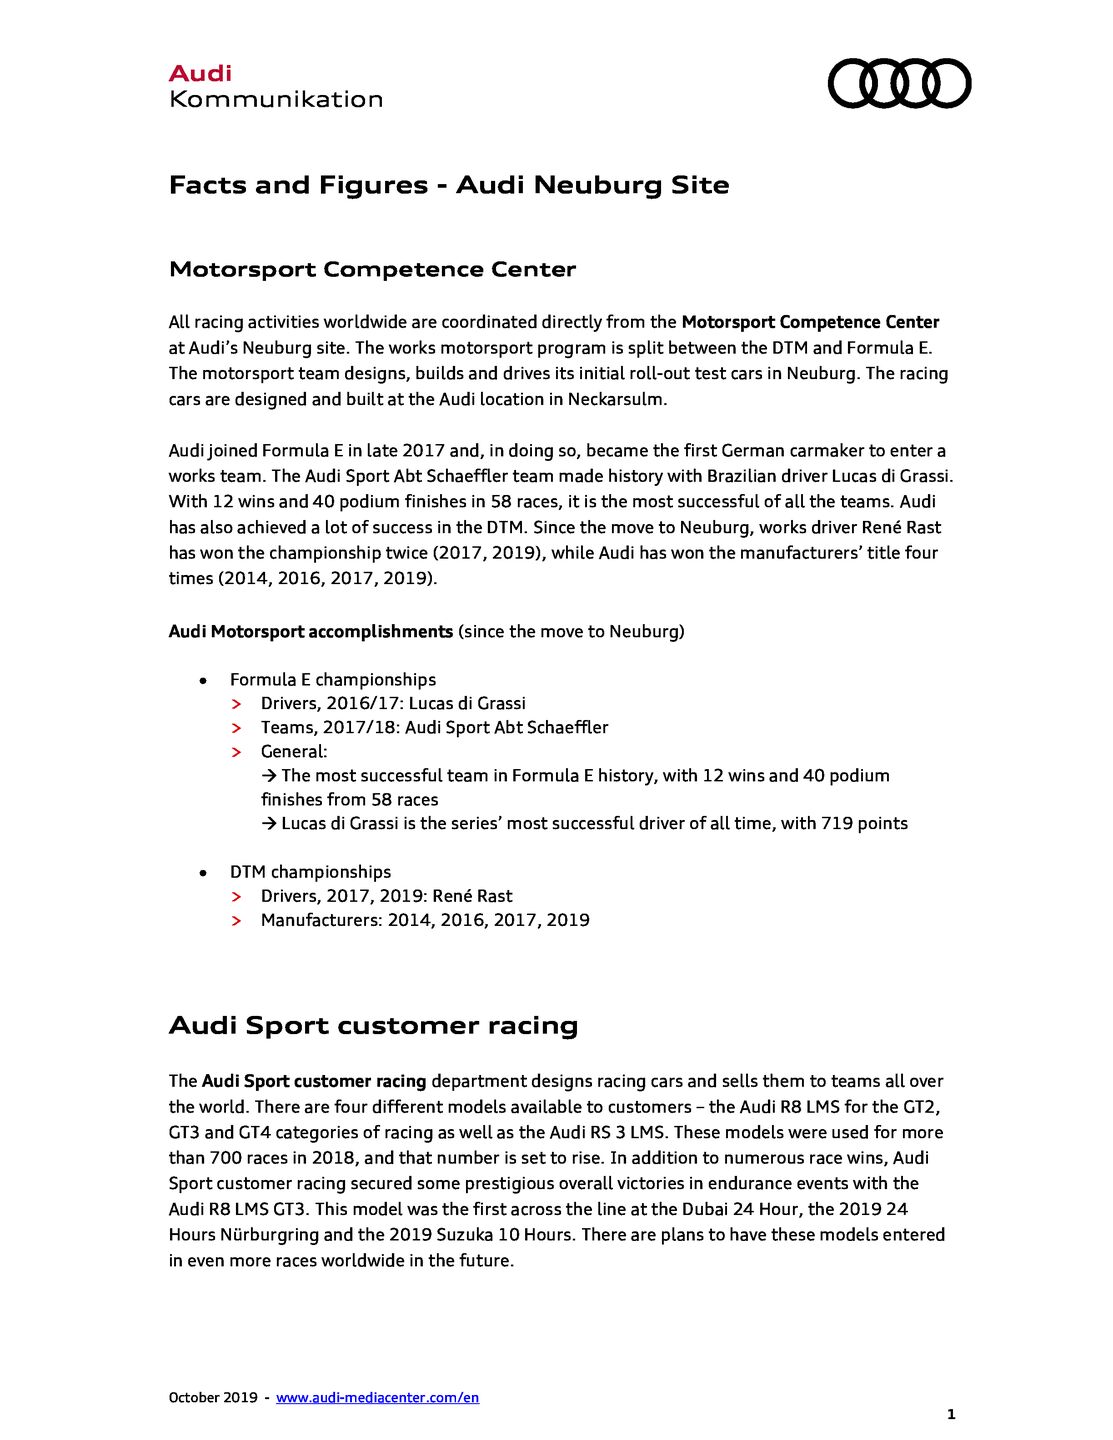 Facts and Figures - Audi Neuburg Site